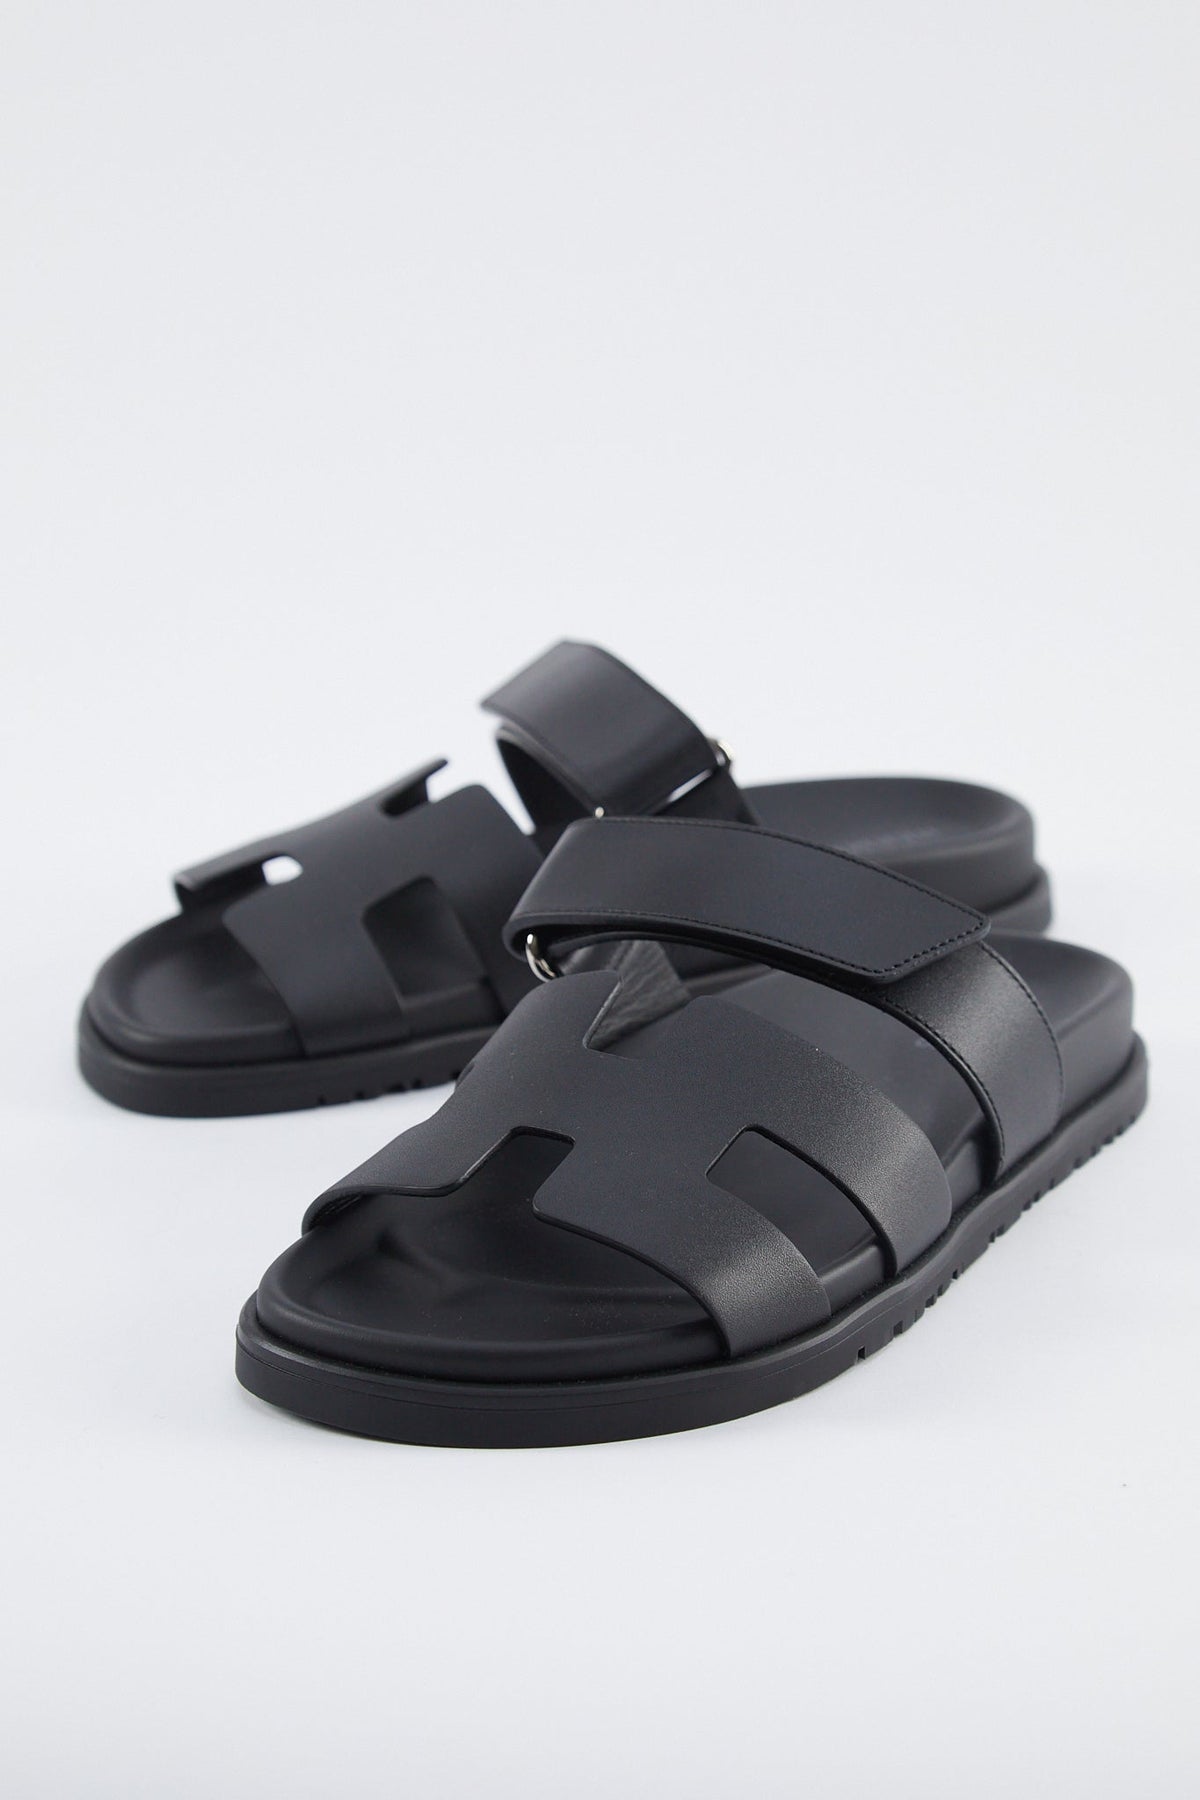 Hermès Chypre Leather Sandals (Black) – The Luxury Shopper